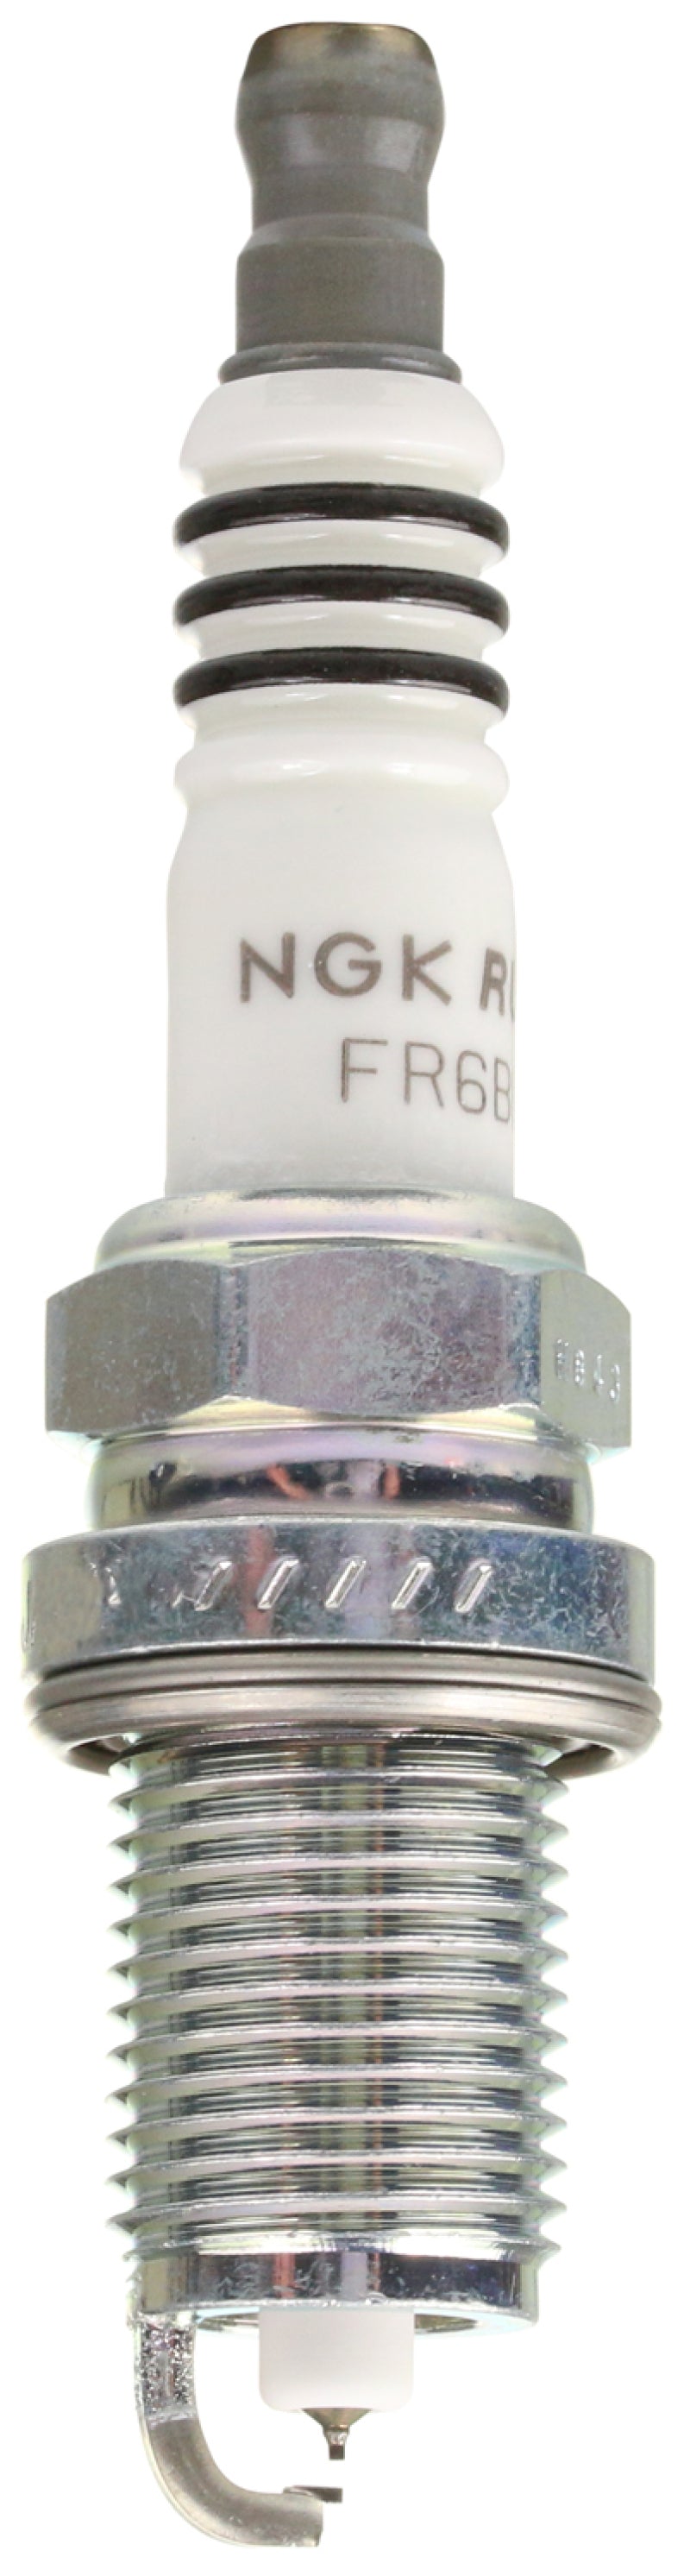 NGK Ruthenium HX Spark Plug Box of 4 (FR6BHX-S).